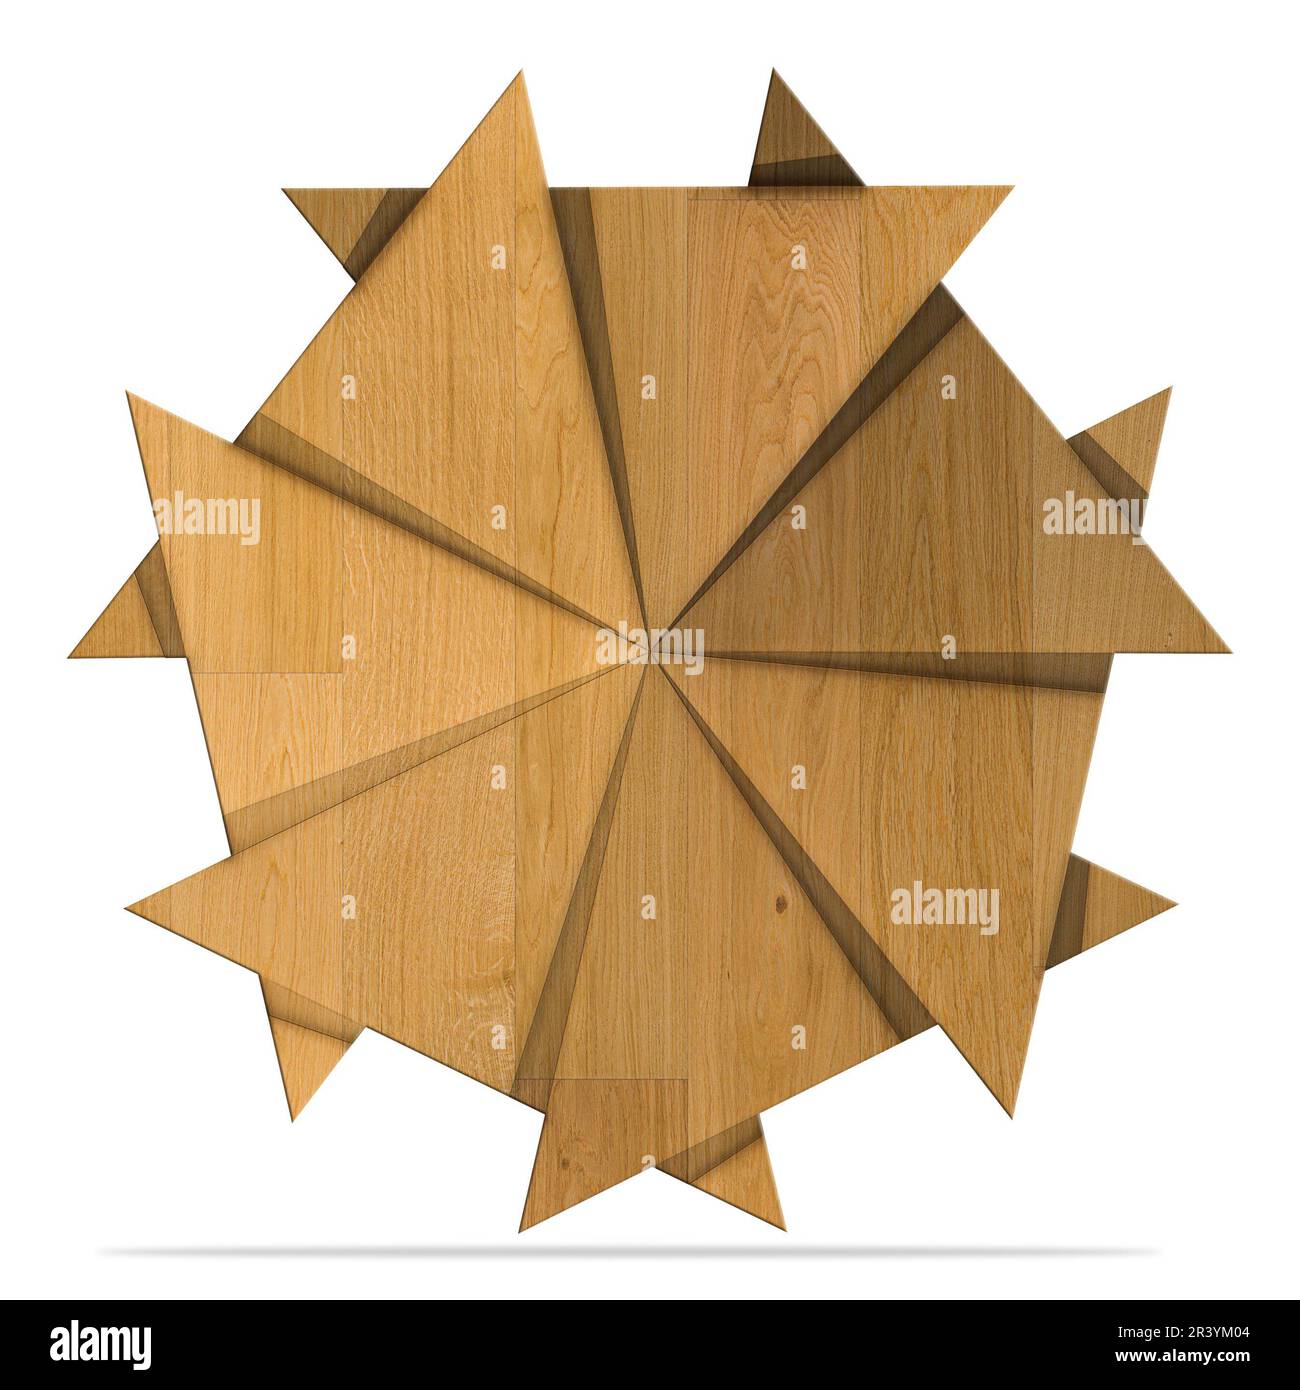 Panel de muebles de madera marrón círculo redondo espiral patrón de fondo fractal. Elemento de decoración de pared de muebles. Fondo fractal de madera, aislado. Foto de stock